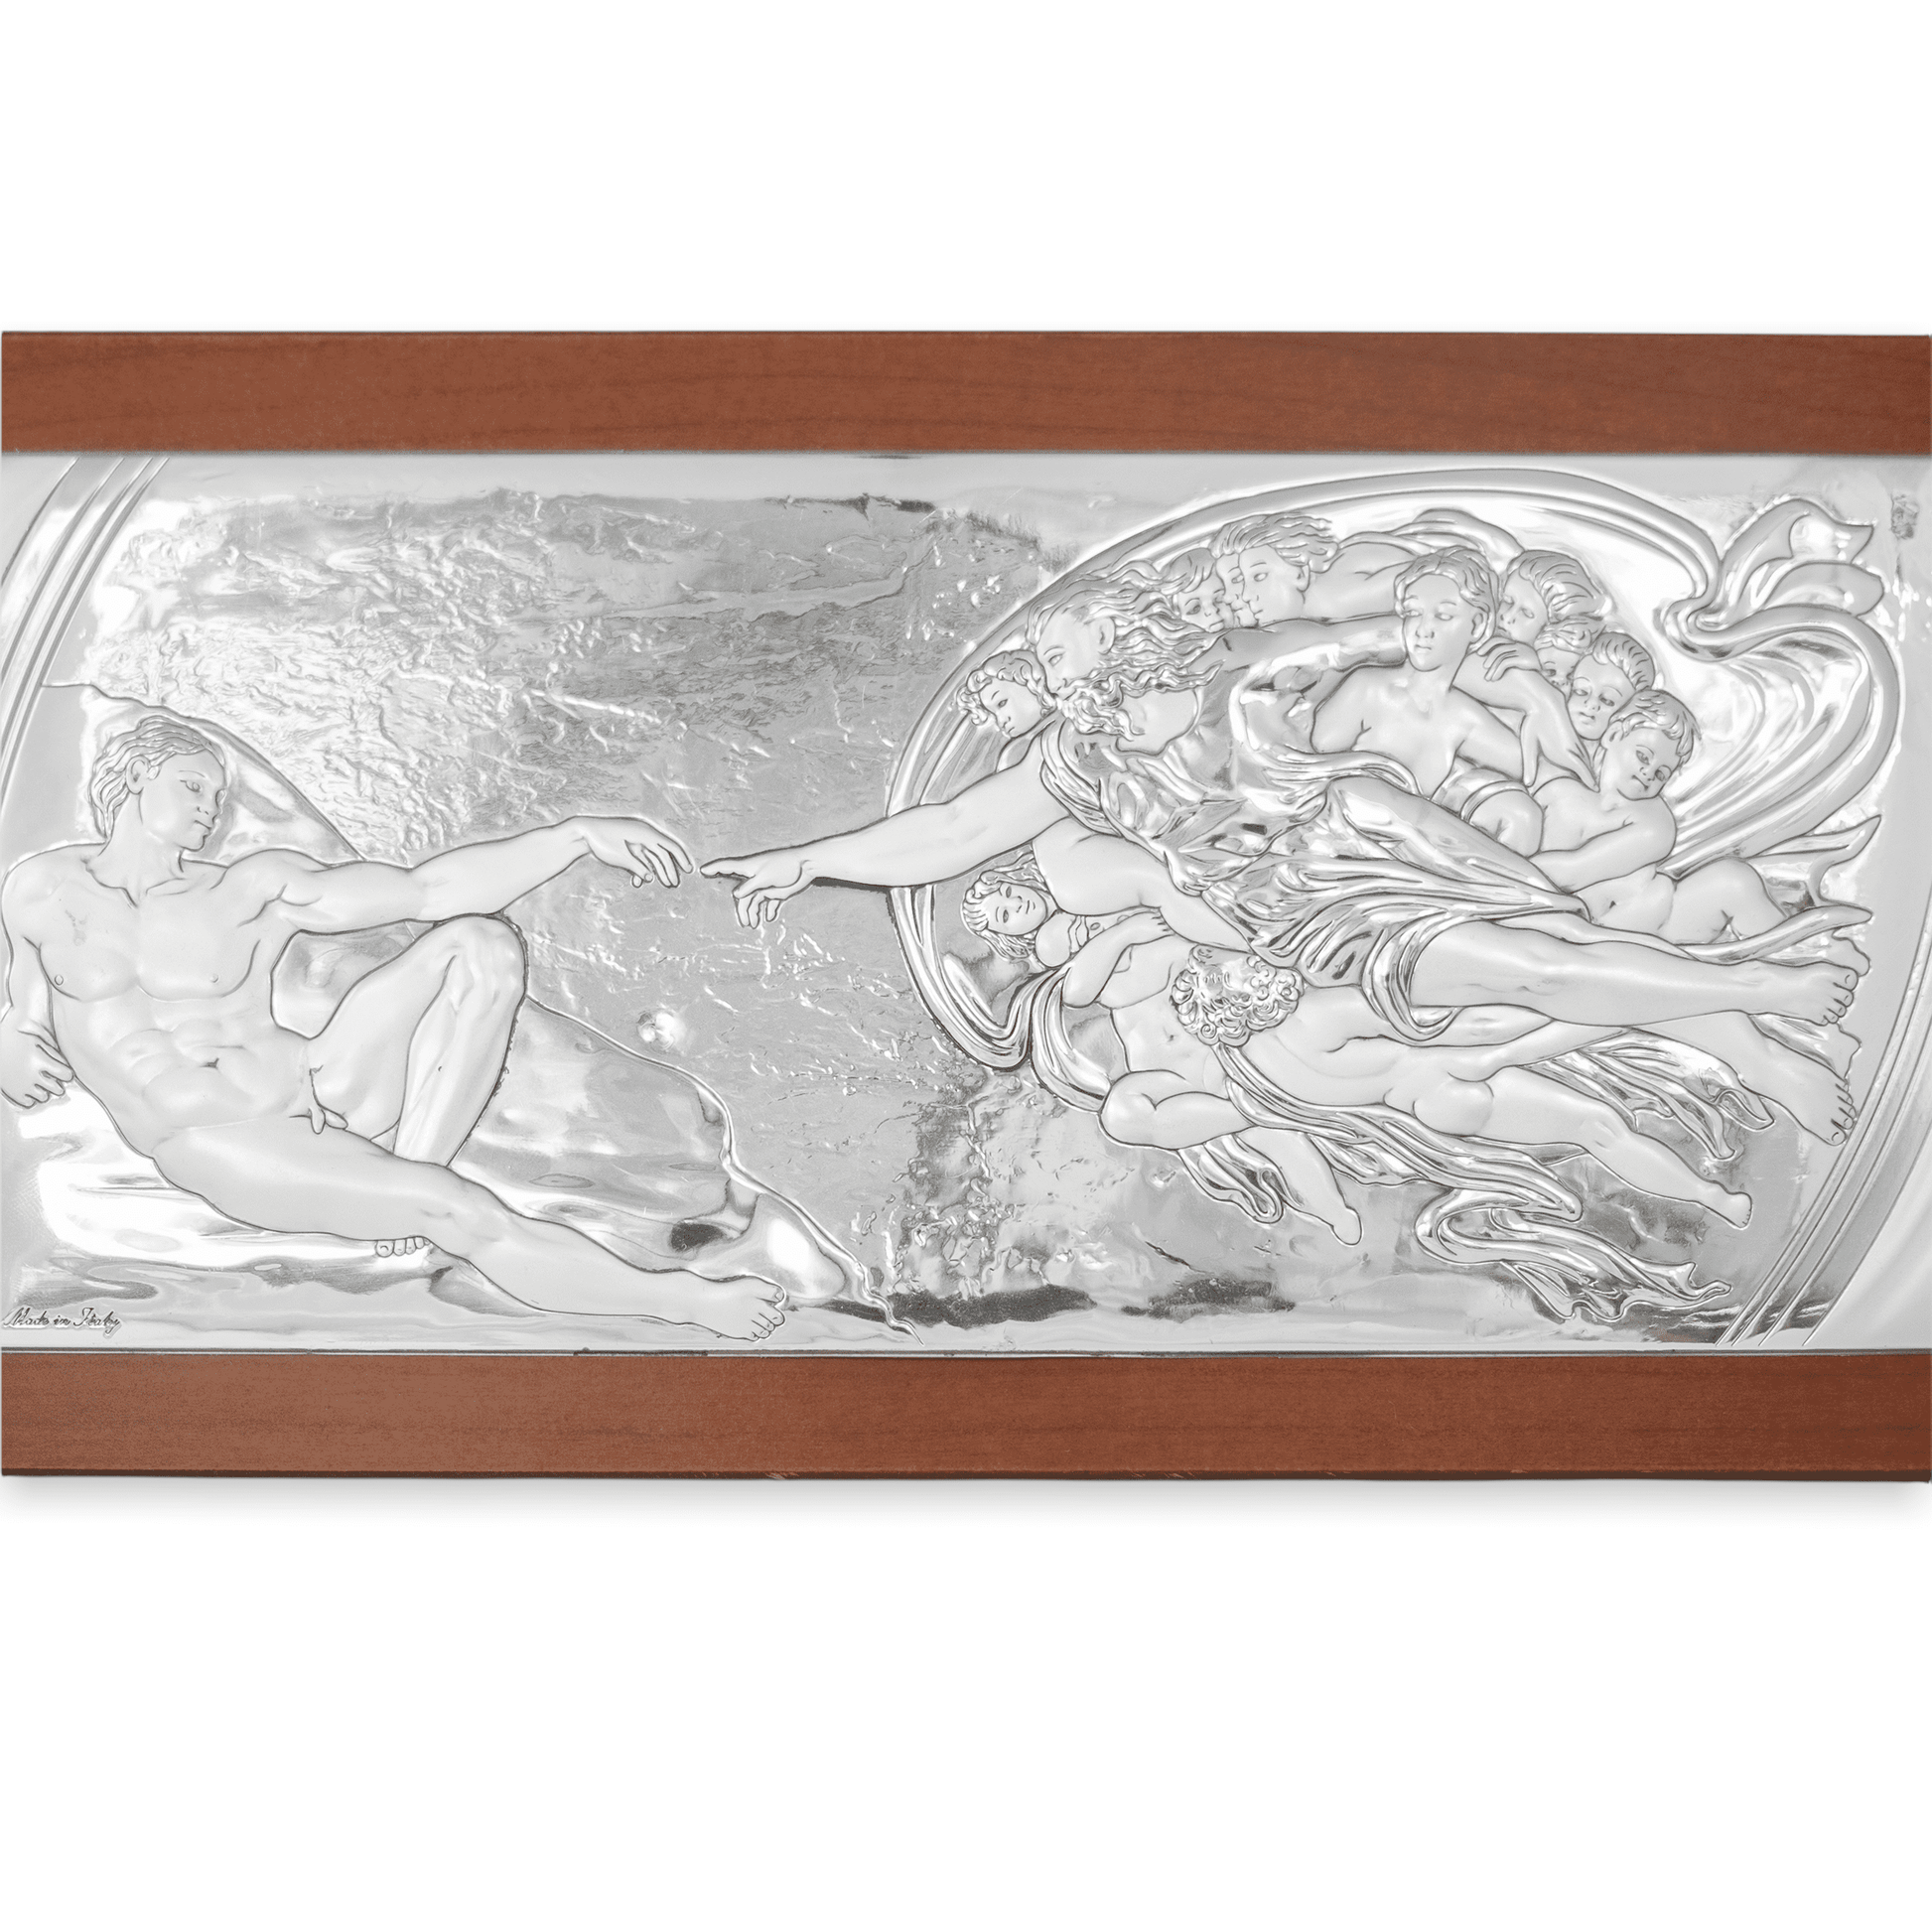 MONDO CATTOLICO 4X8,5 cm Michelangelo's Creation of Adamo Bilaminated Sterling Silver Painting